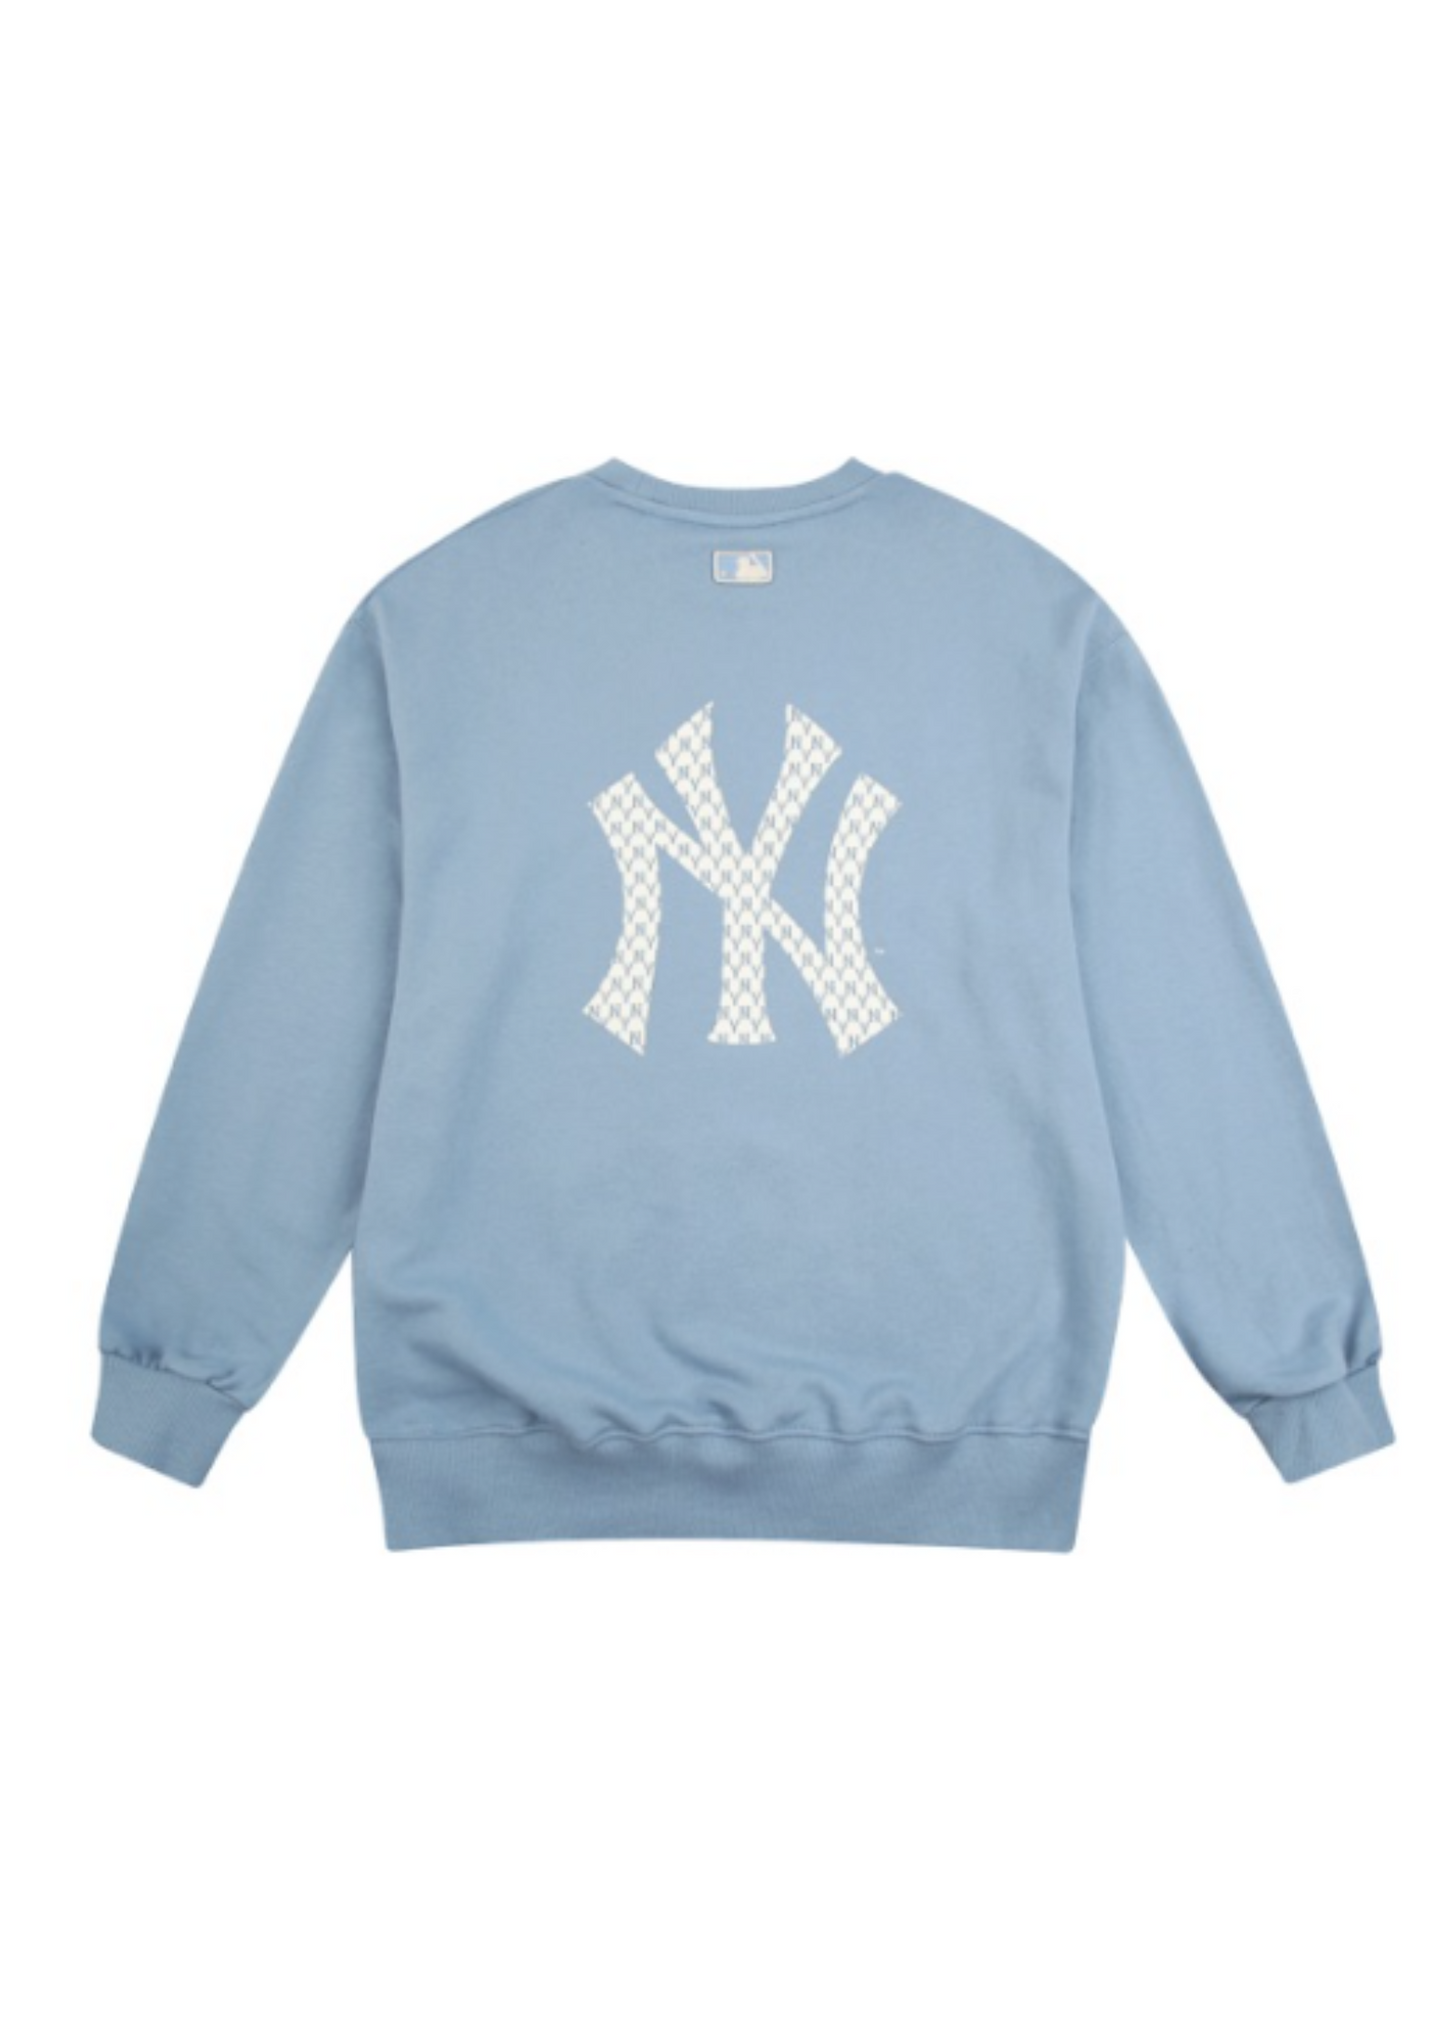 MLB New Era New York Yankees Back Big Logo Sweatshirts (Light Blue)